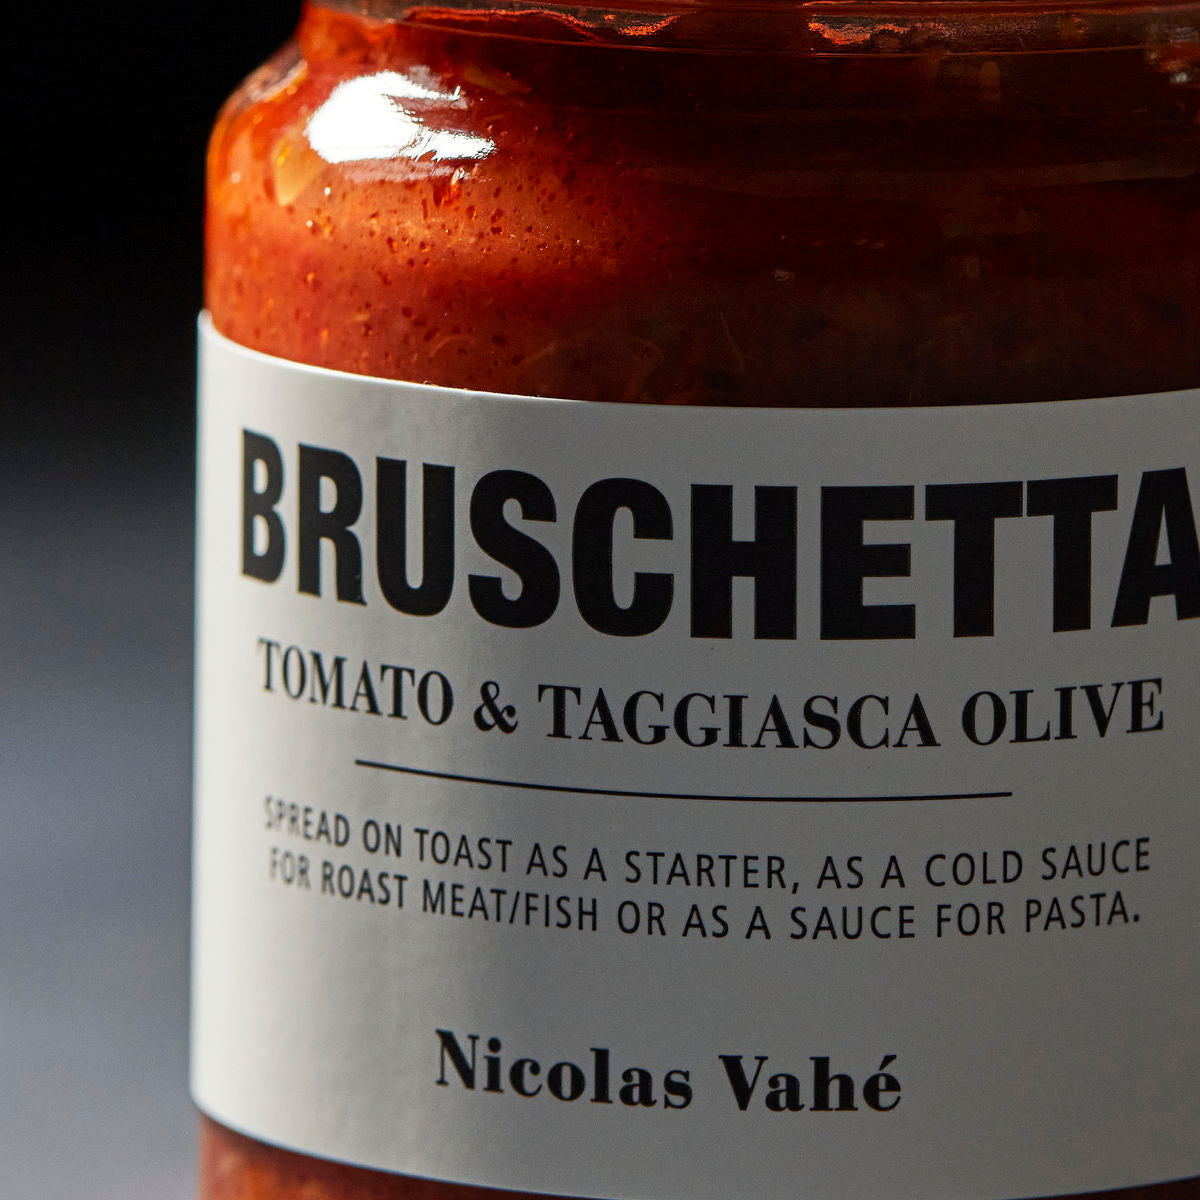 Bruschetta, Tomato & Taggiasca Olive